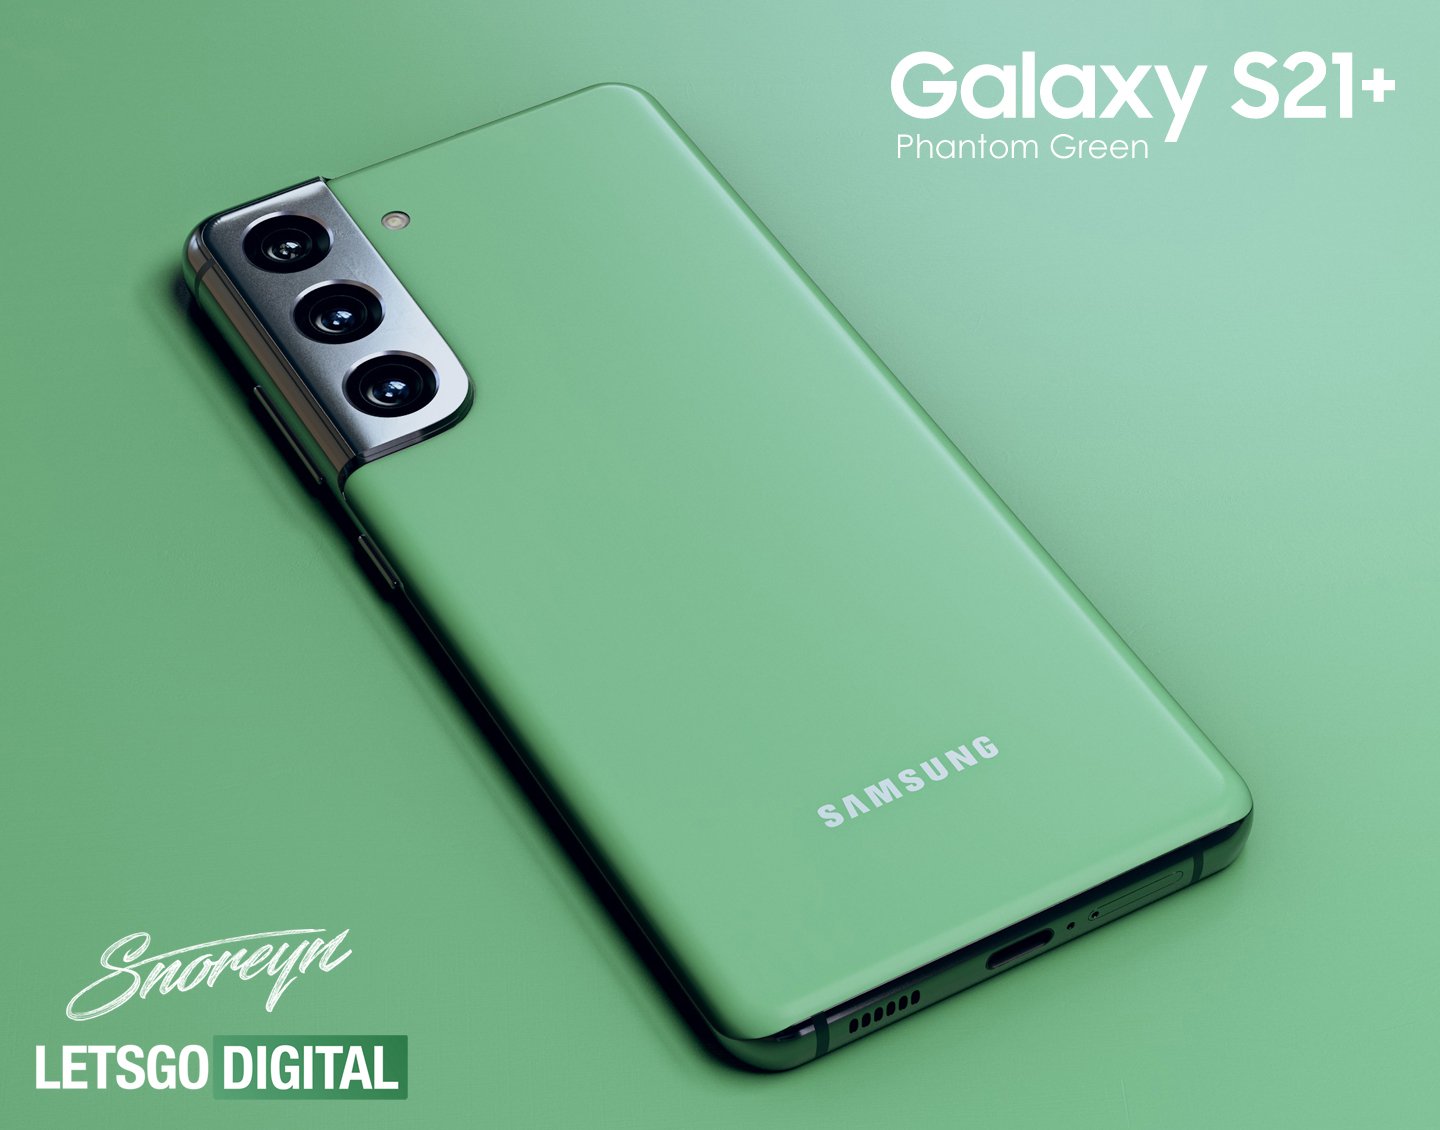 Samsung Galaxy S21 Plus Phantom Green digital LetsGoRender